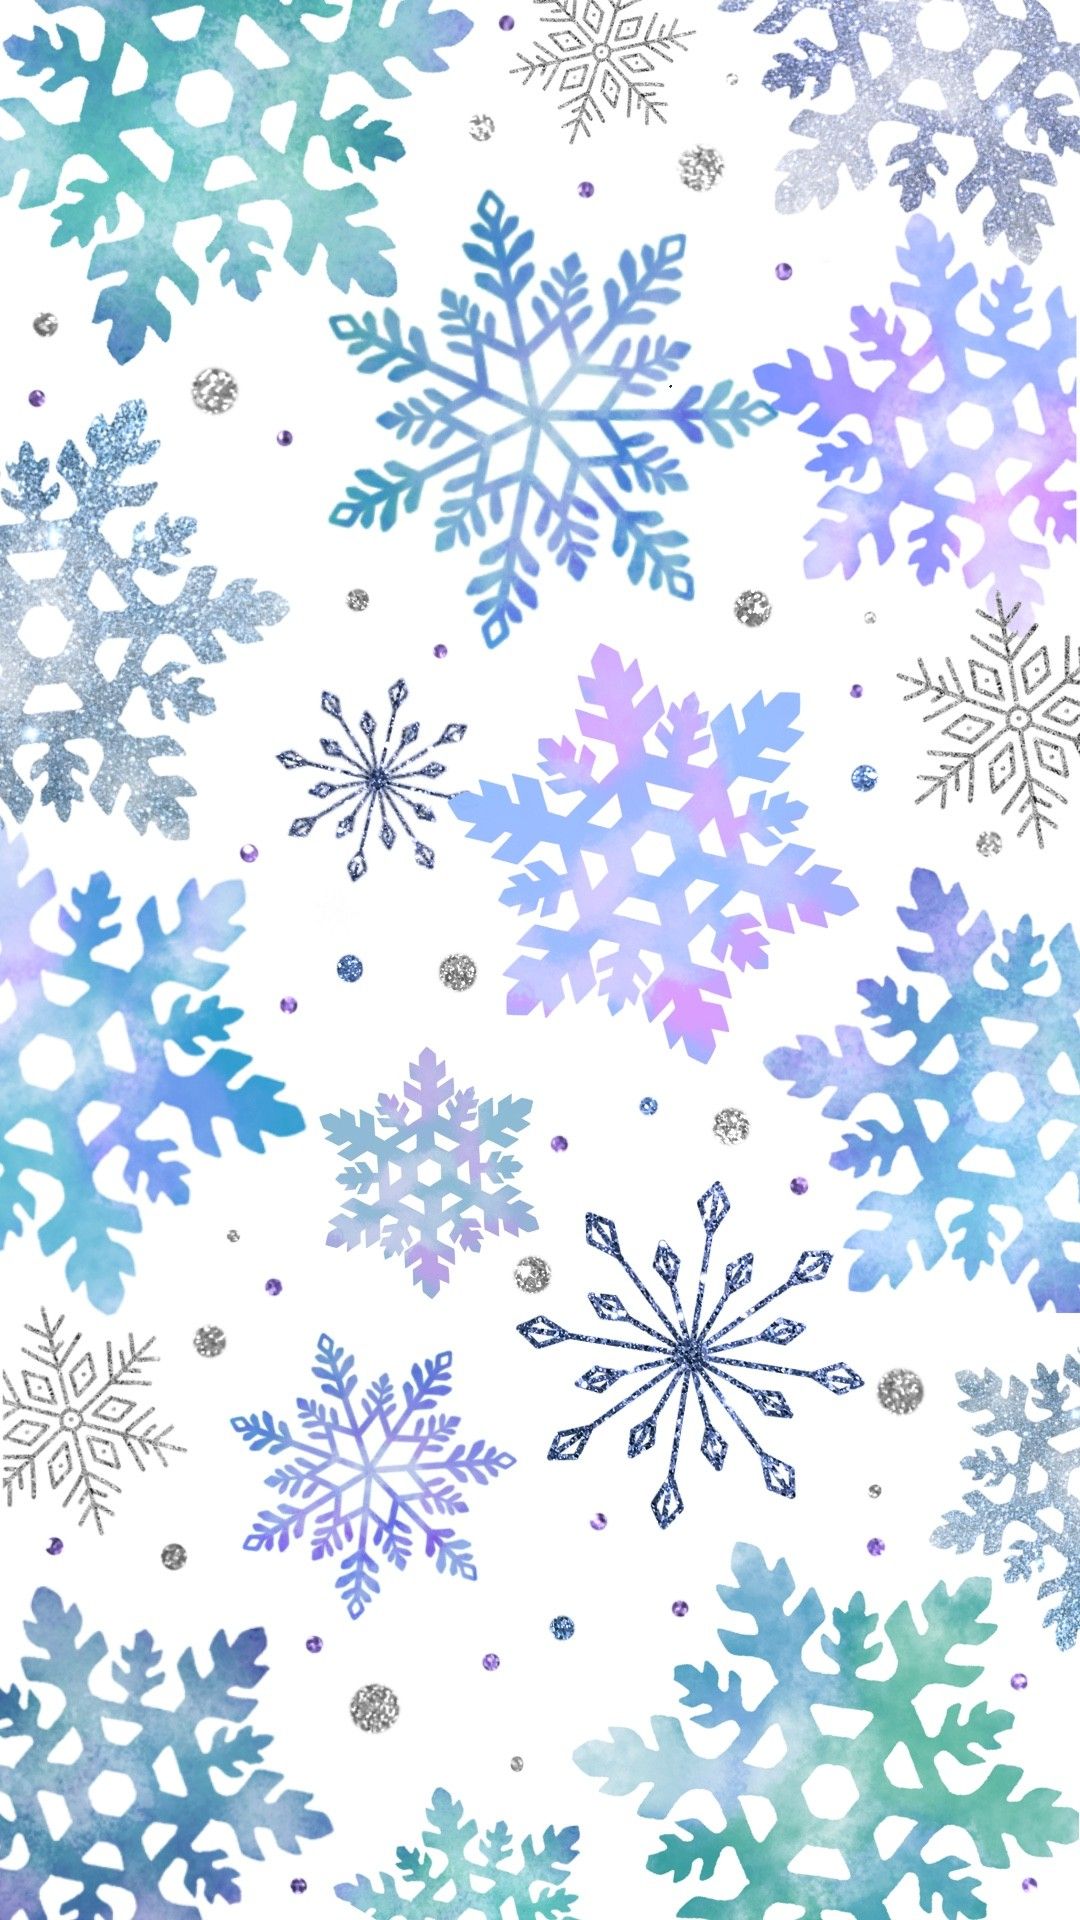 Snowflake wallpaper. Winter wallpaper, Snowflake wallpaper, iPhone wallpaper winter